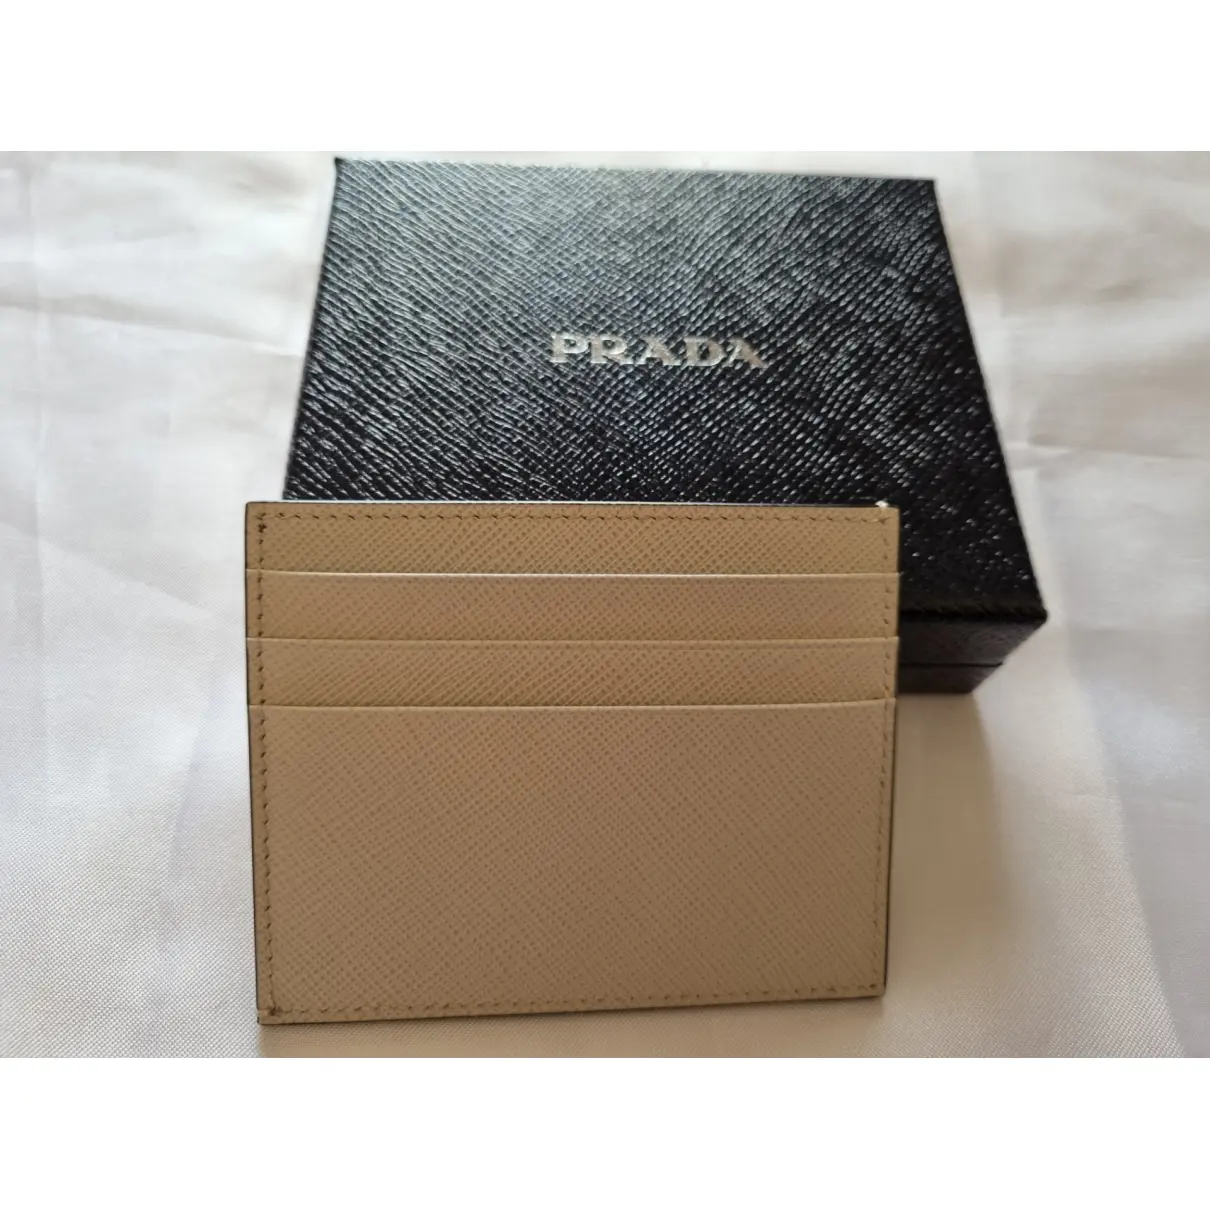 Buy Prada Leather small bag online